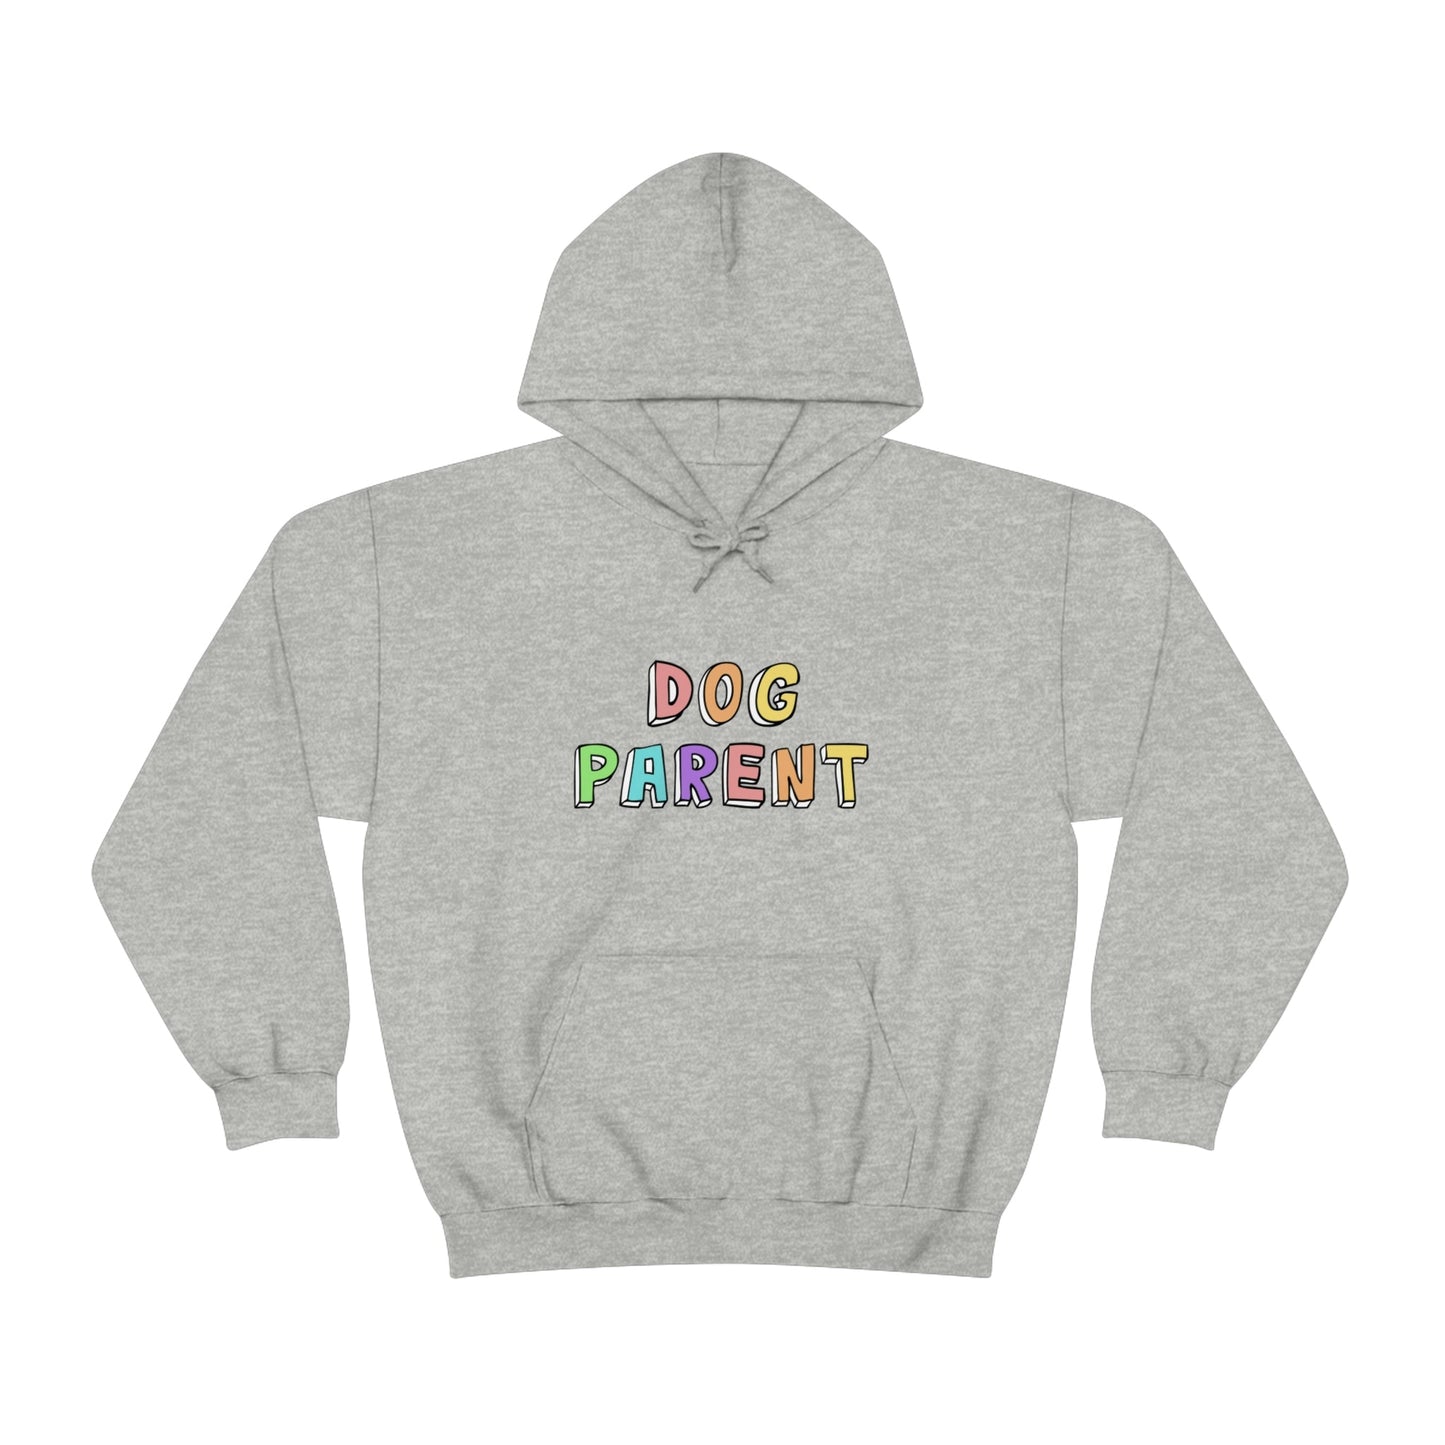 Dog Parent | Hooded Sweatshirt - Detezi Designs-27207390936252009144